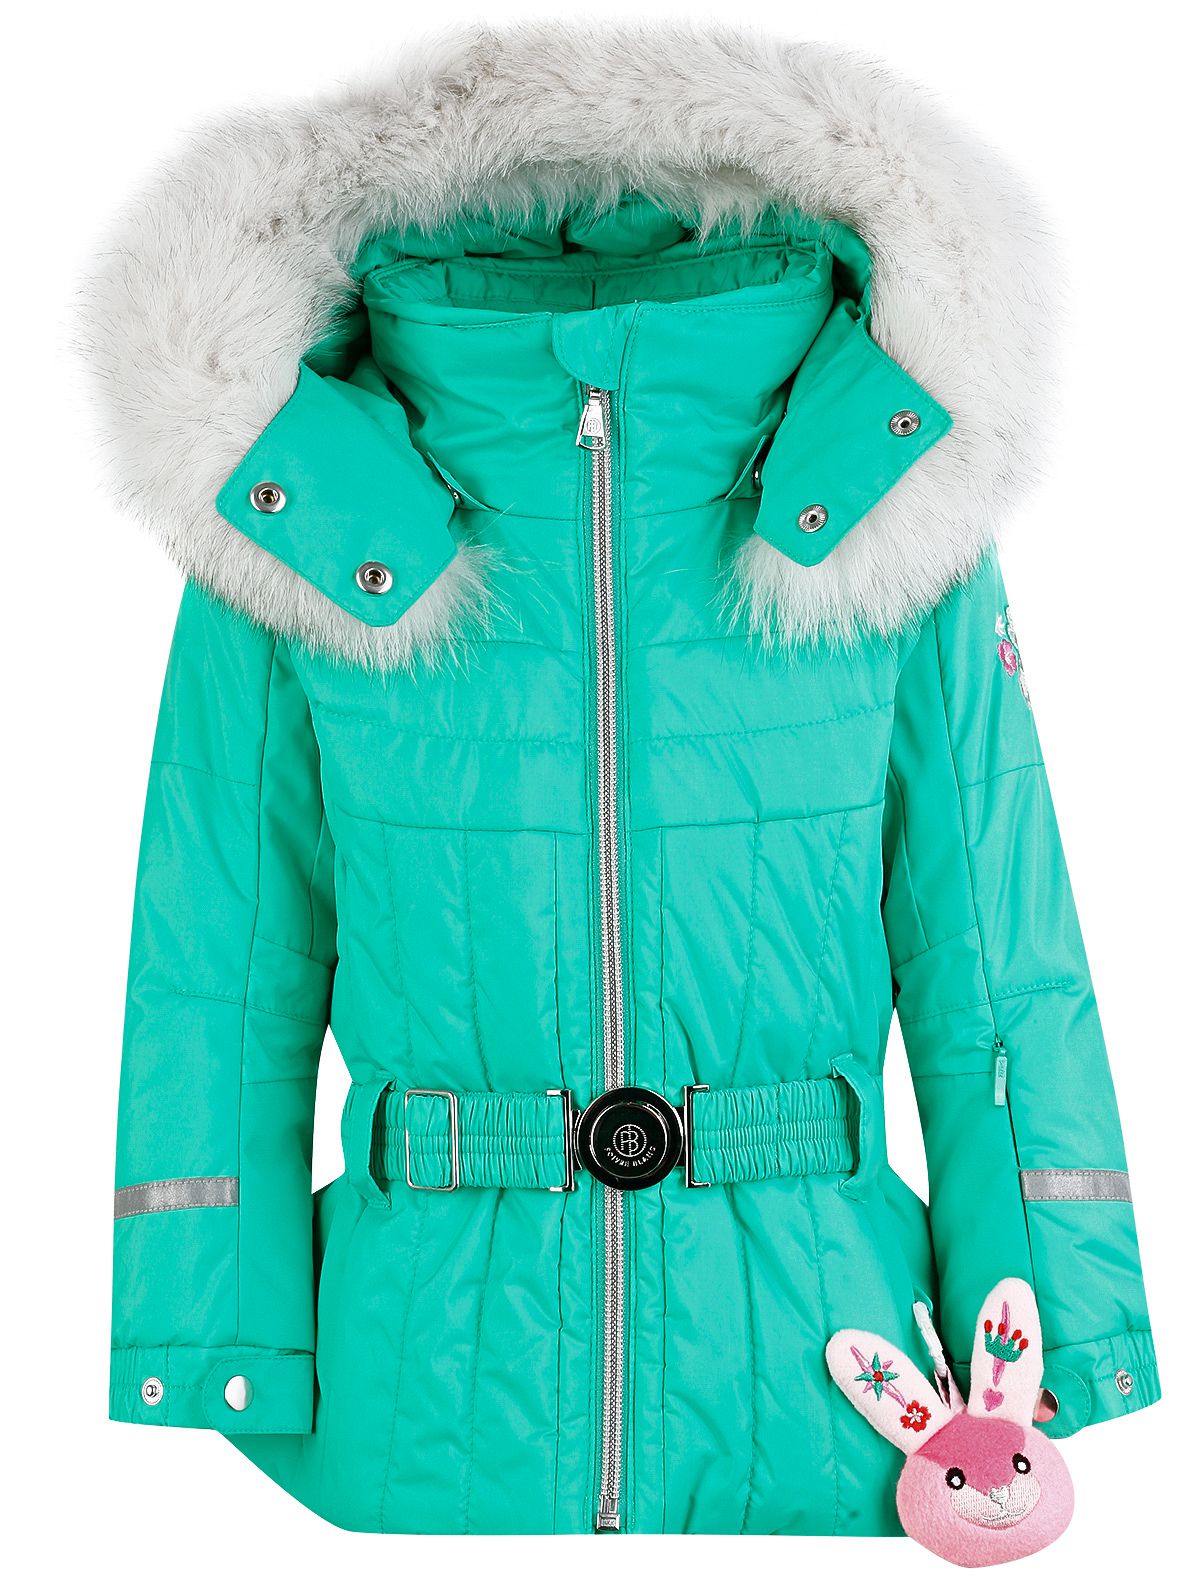 Куртка горнолыжная Poivre Blanc 19-20 Ski Jacket Emerald Green куртка горнолыжная poivre blanc 19 20 ski jacket aqua blue